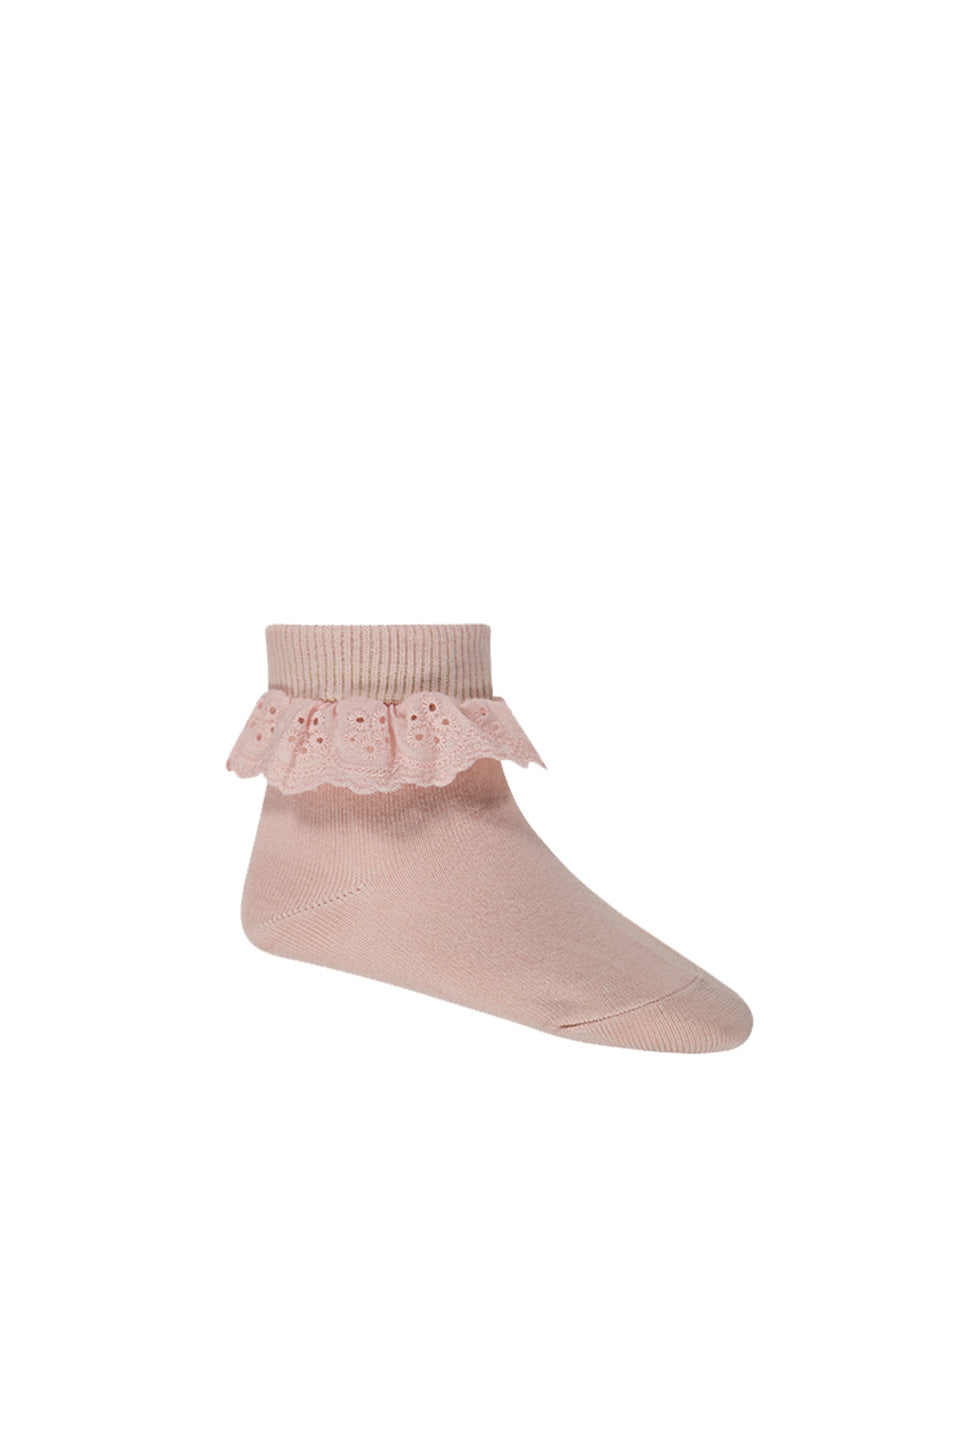 Frill Ankle Sock - Ballerina - Baby pink girls frill socks from Jamie Kay